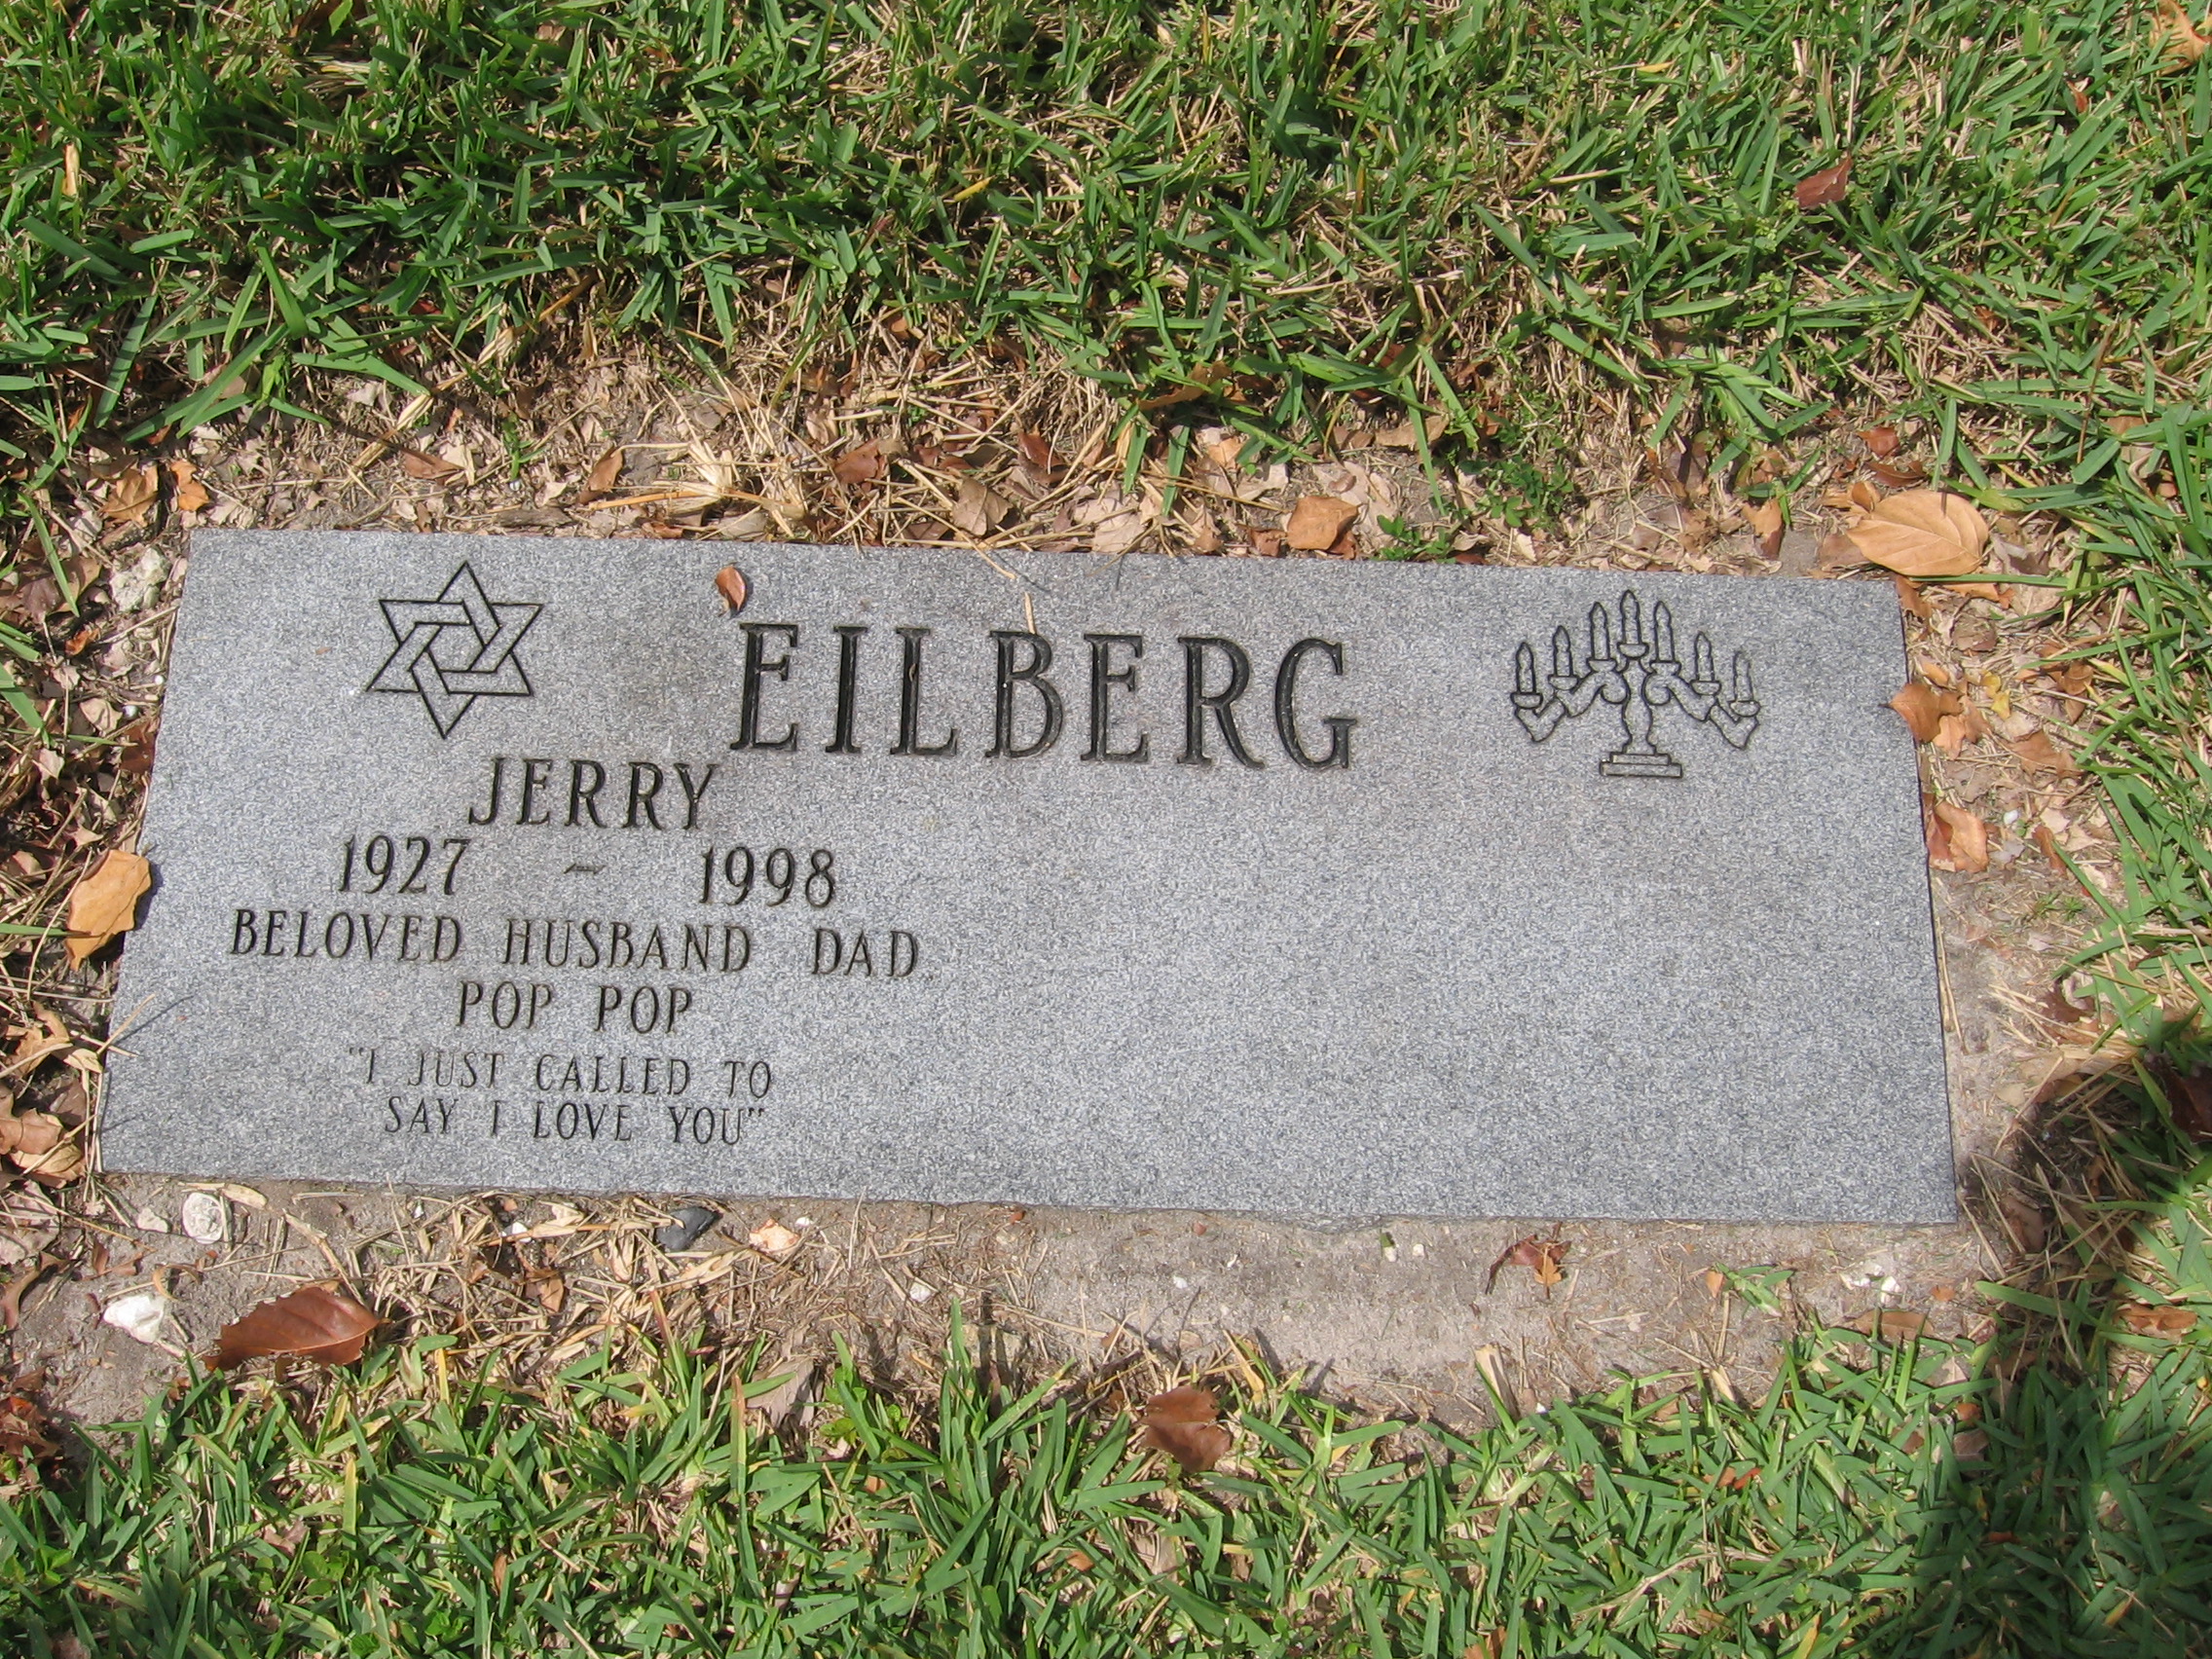 Jerry Eilberg